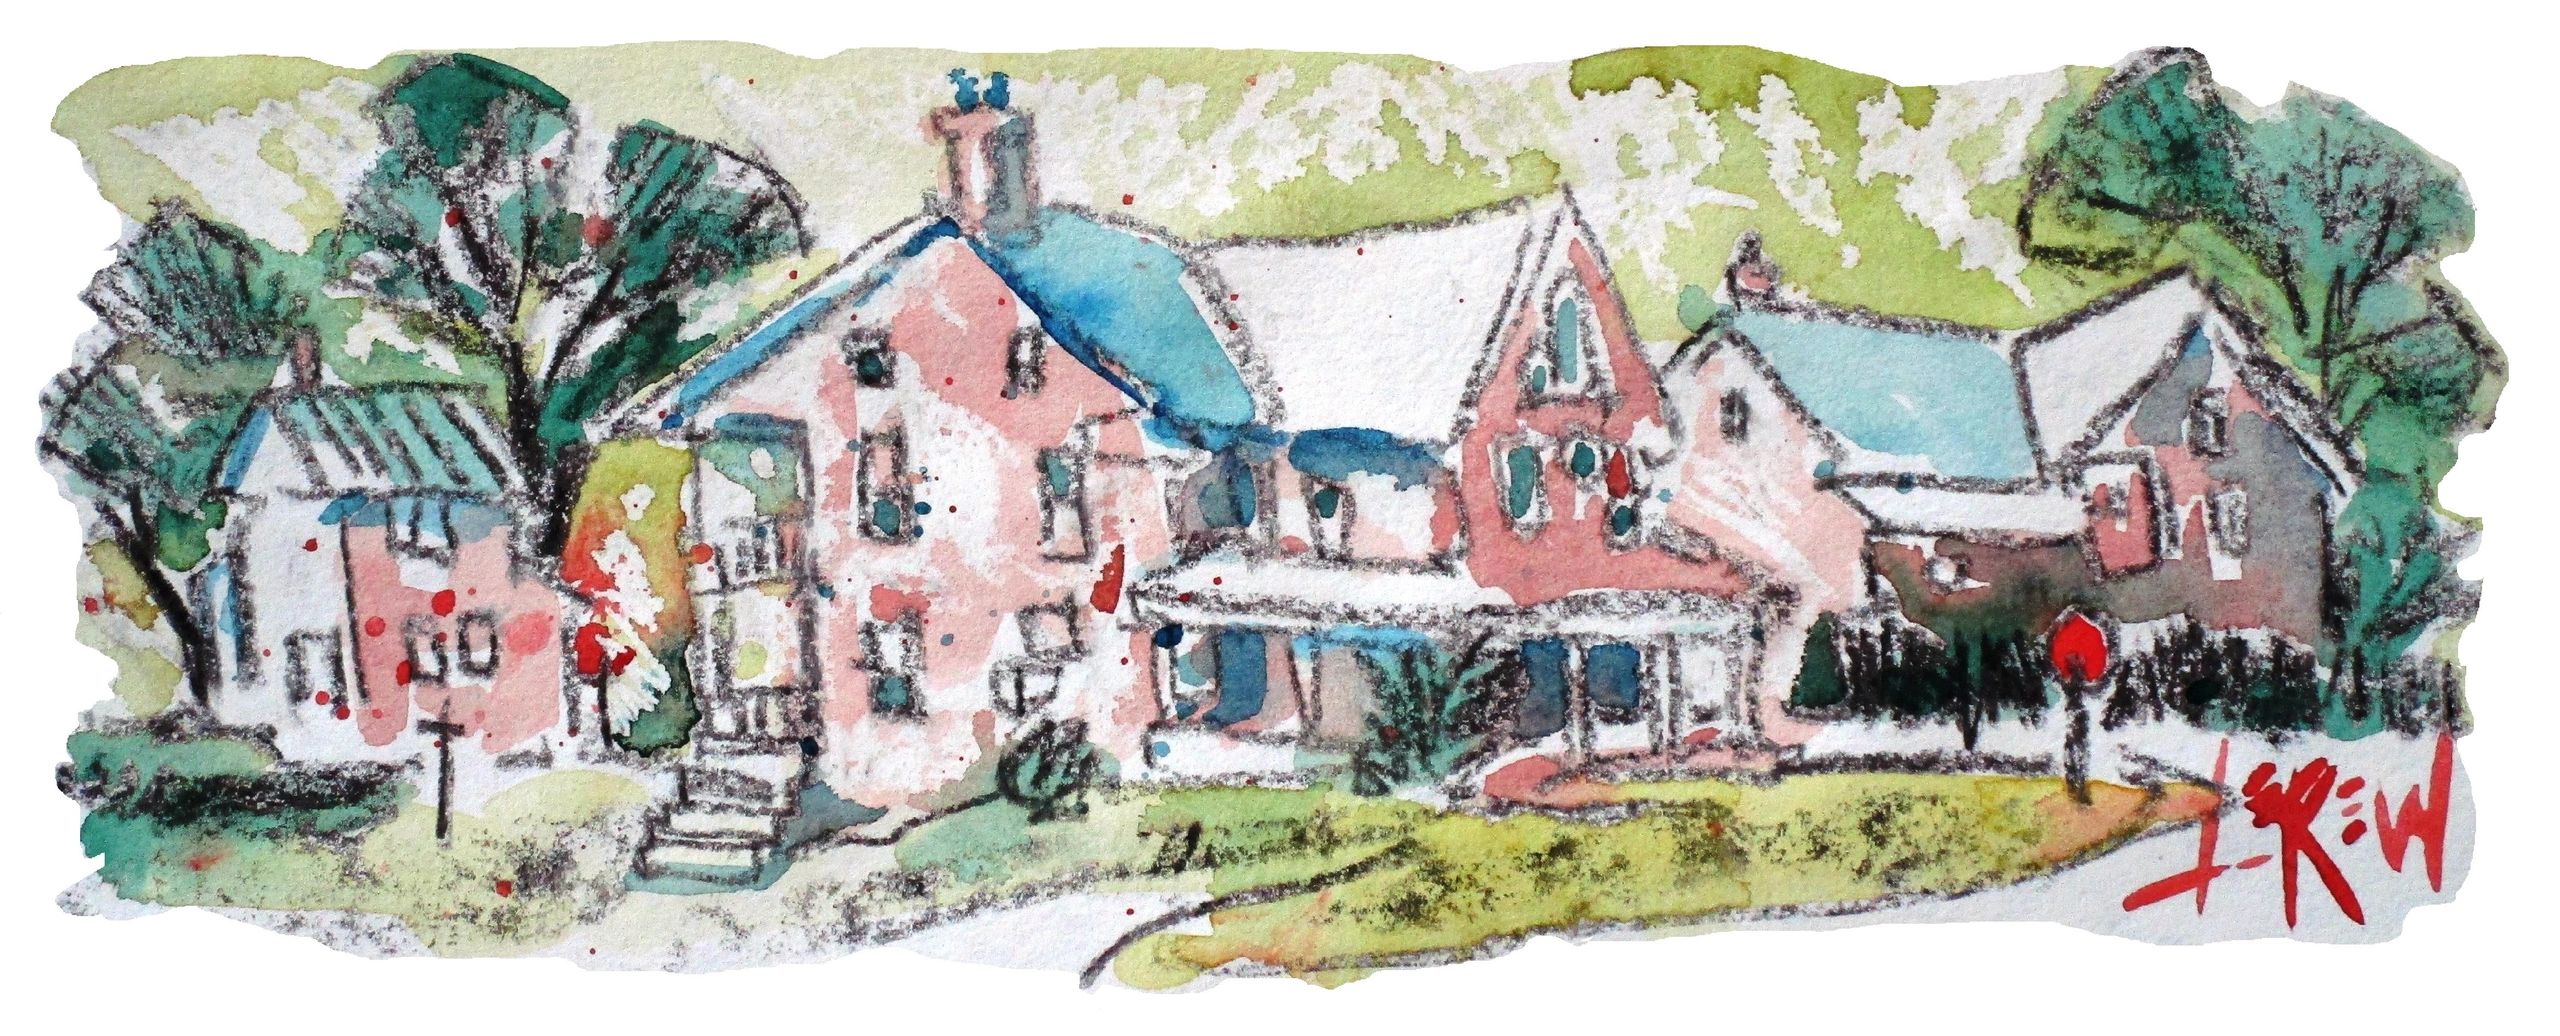 "Crayon House" Crayon Resist Landscape Painting, Dillsburg, Pennsylvania,  by LarryLerew.com